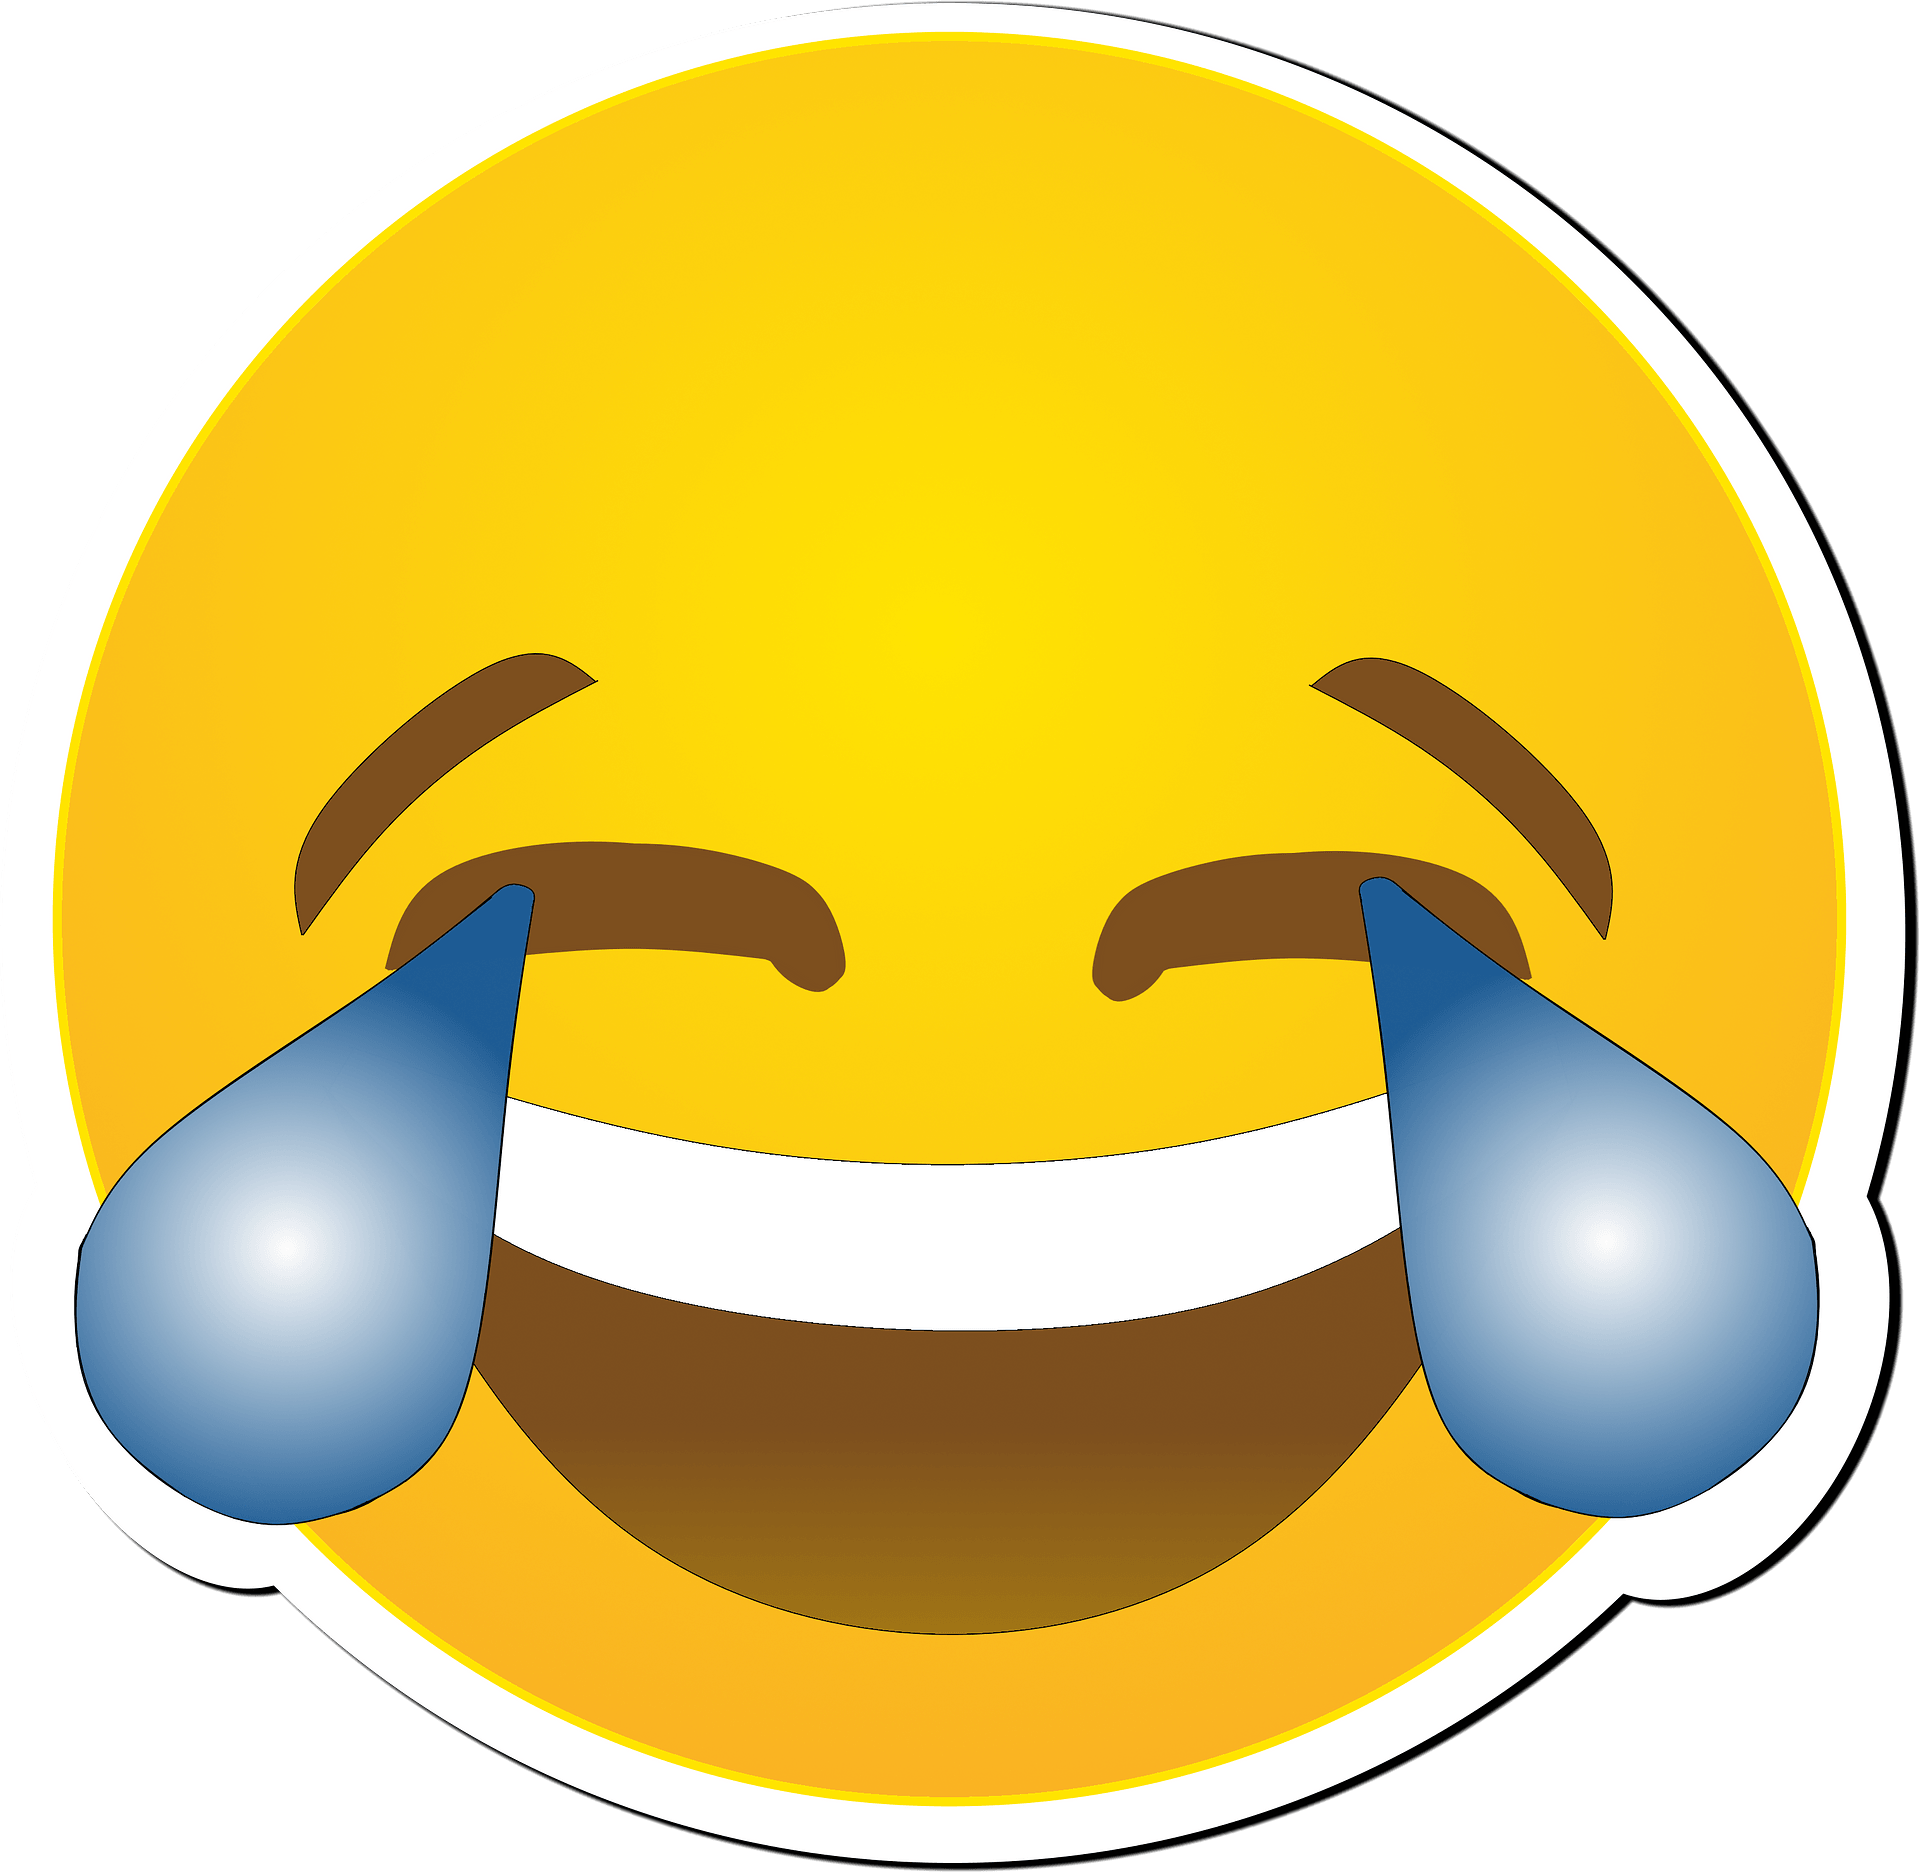 Emoji Laughing PNG Images, Emoji Laughing Clipart Free Download - Clip ...